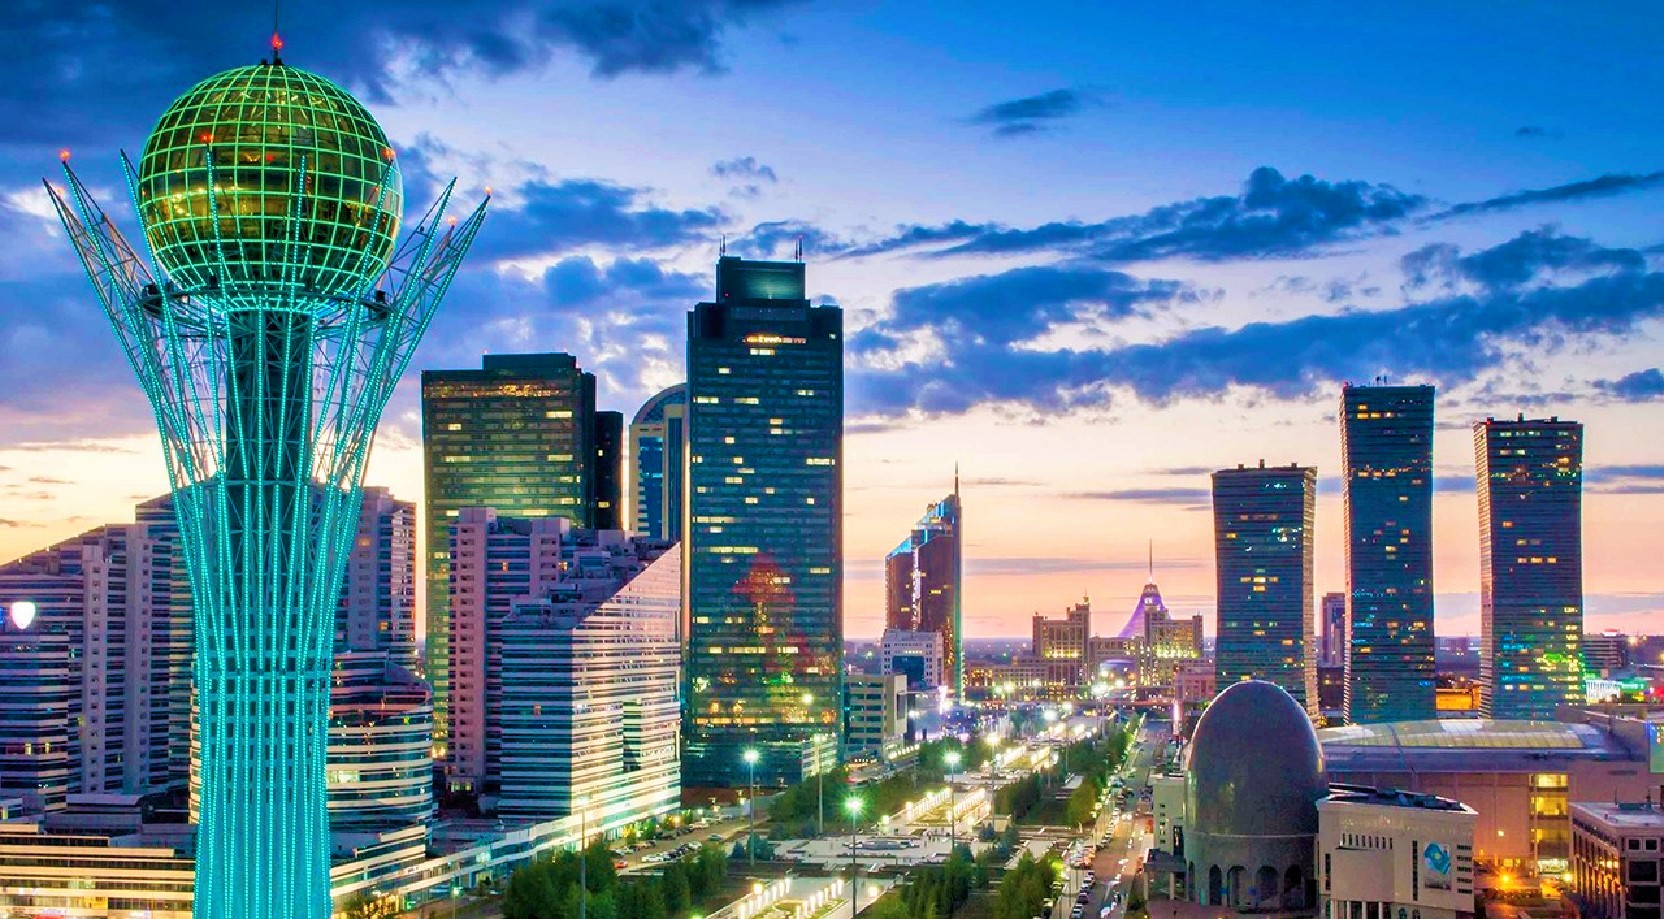 Astana - The Glitzy Capital Of 21st Century Kazakhstan